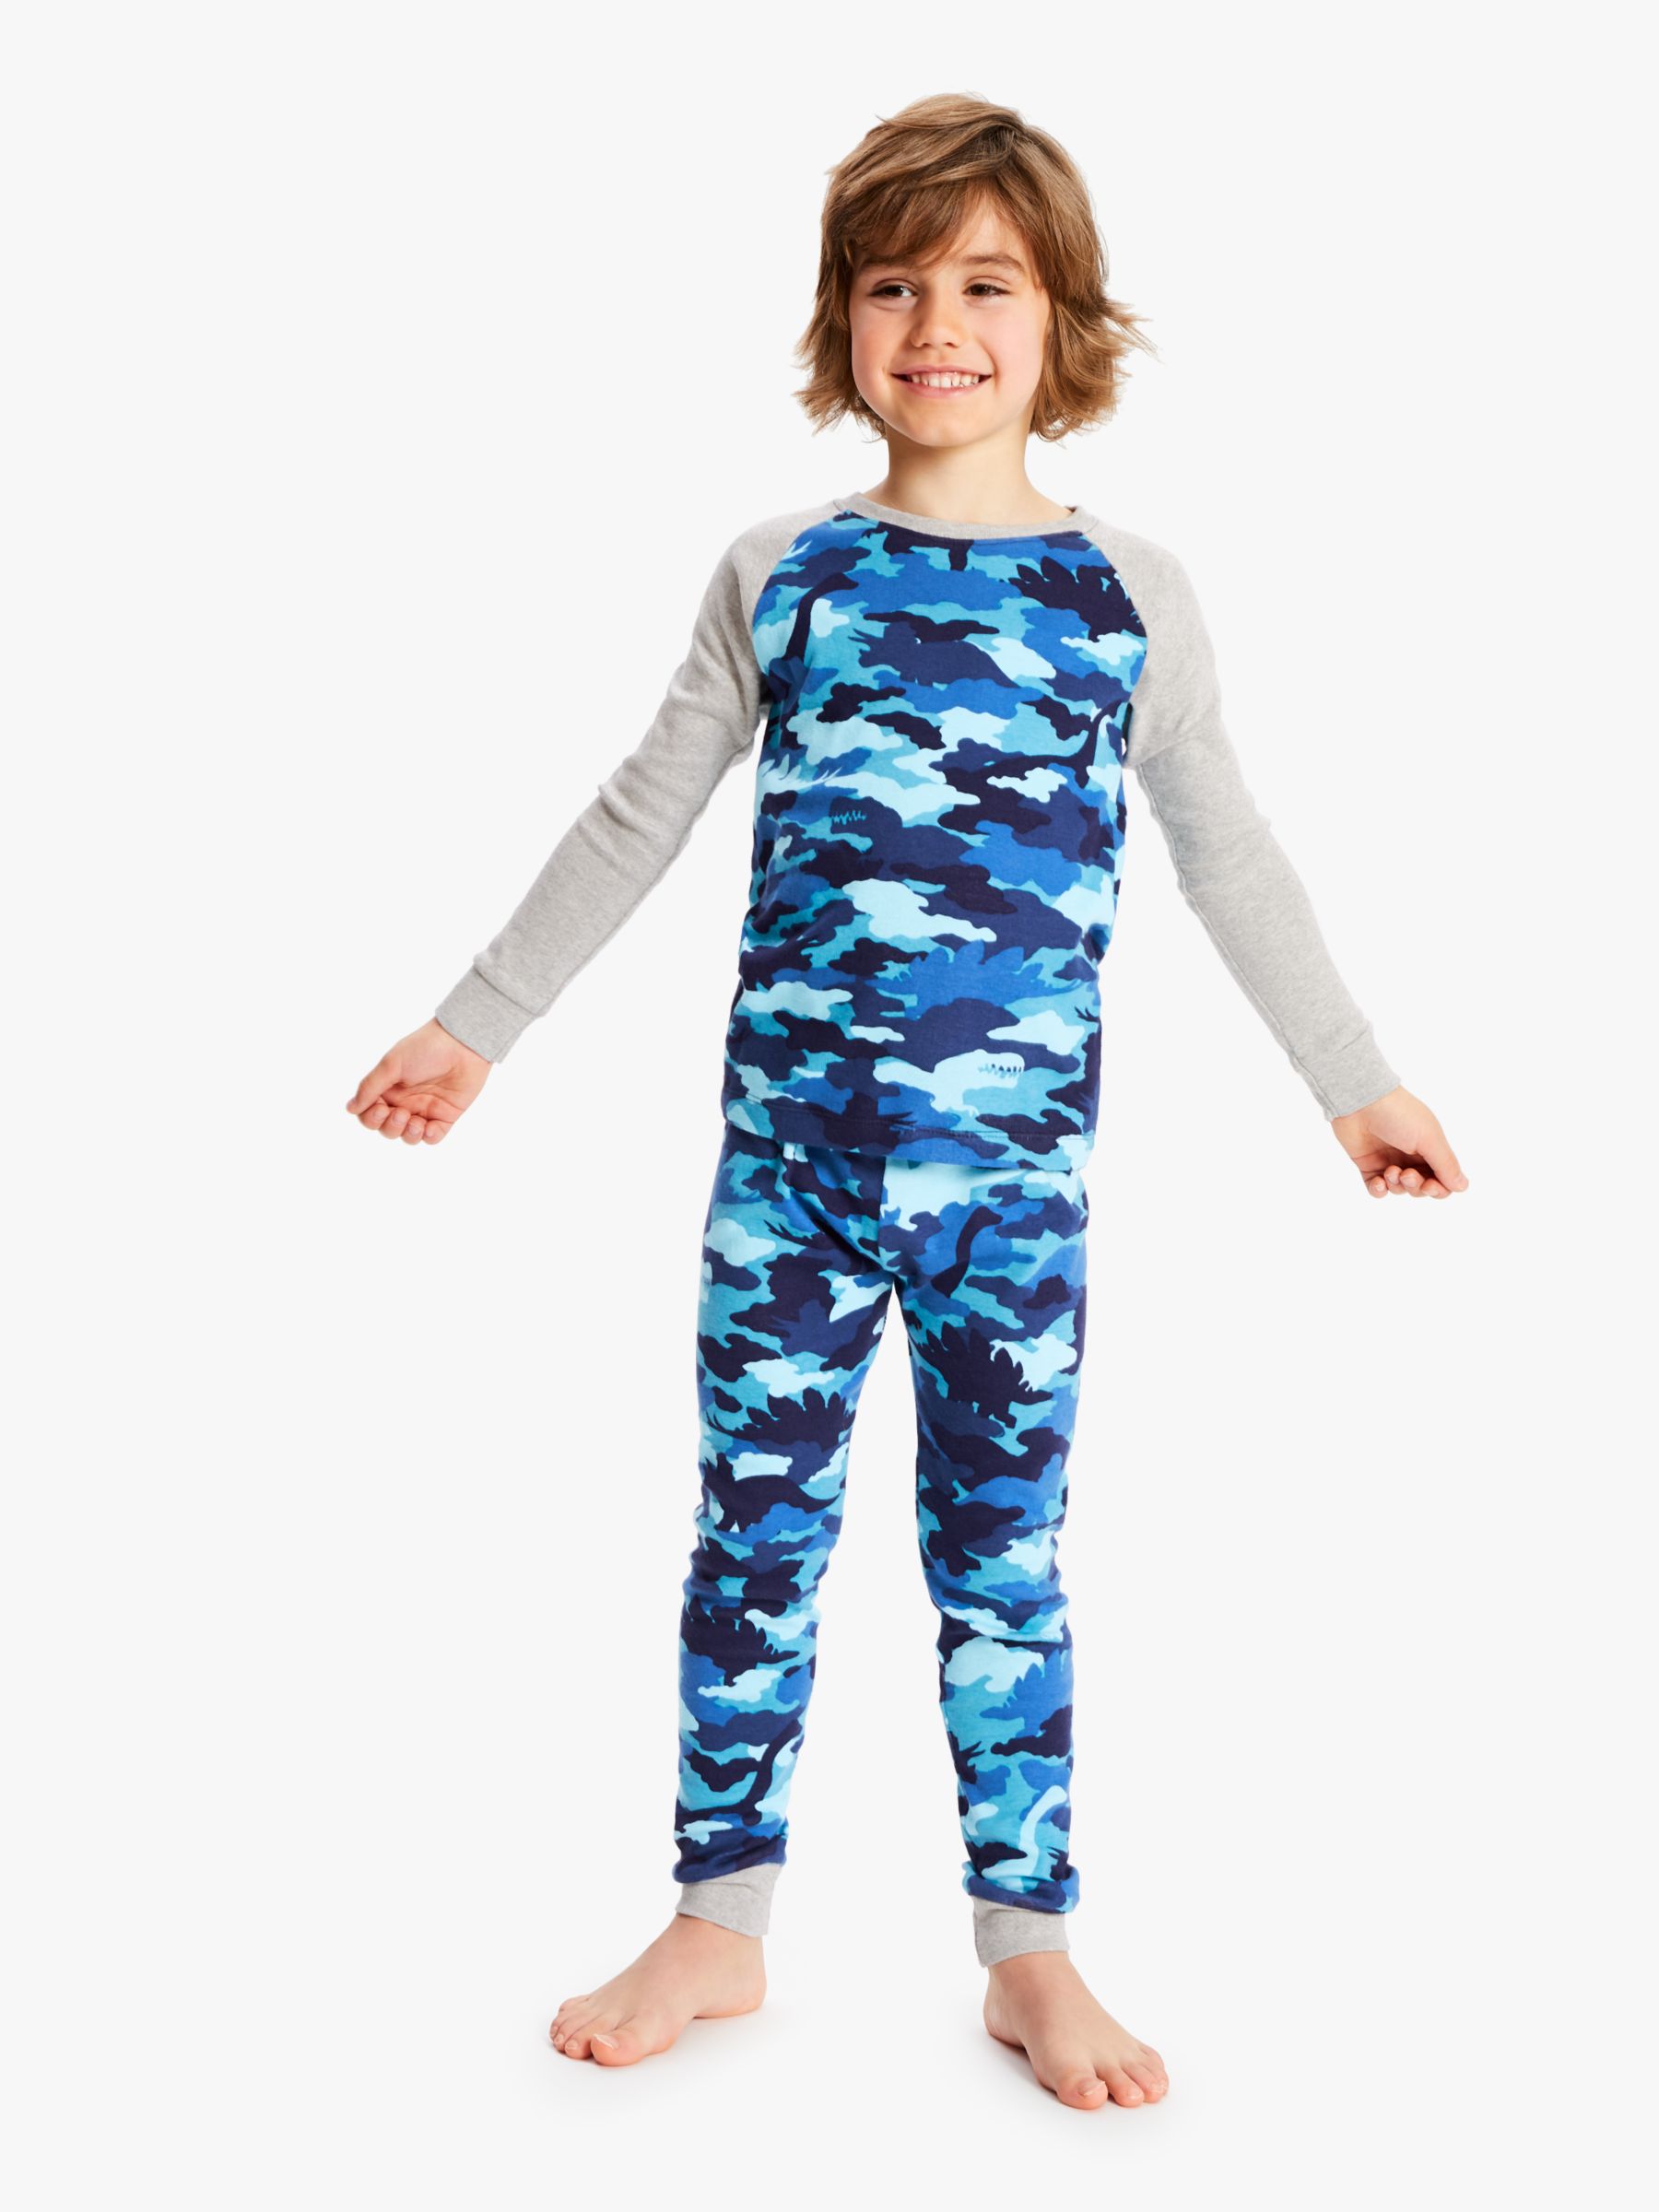 Hatley Boys' Dinosaur Camouflage Pyjamas, Blue